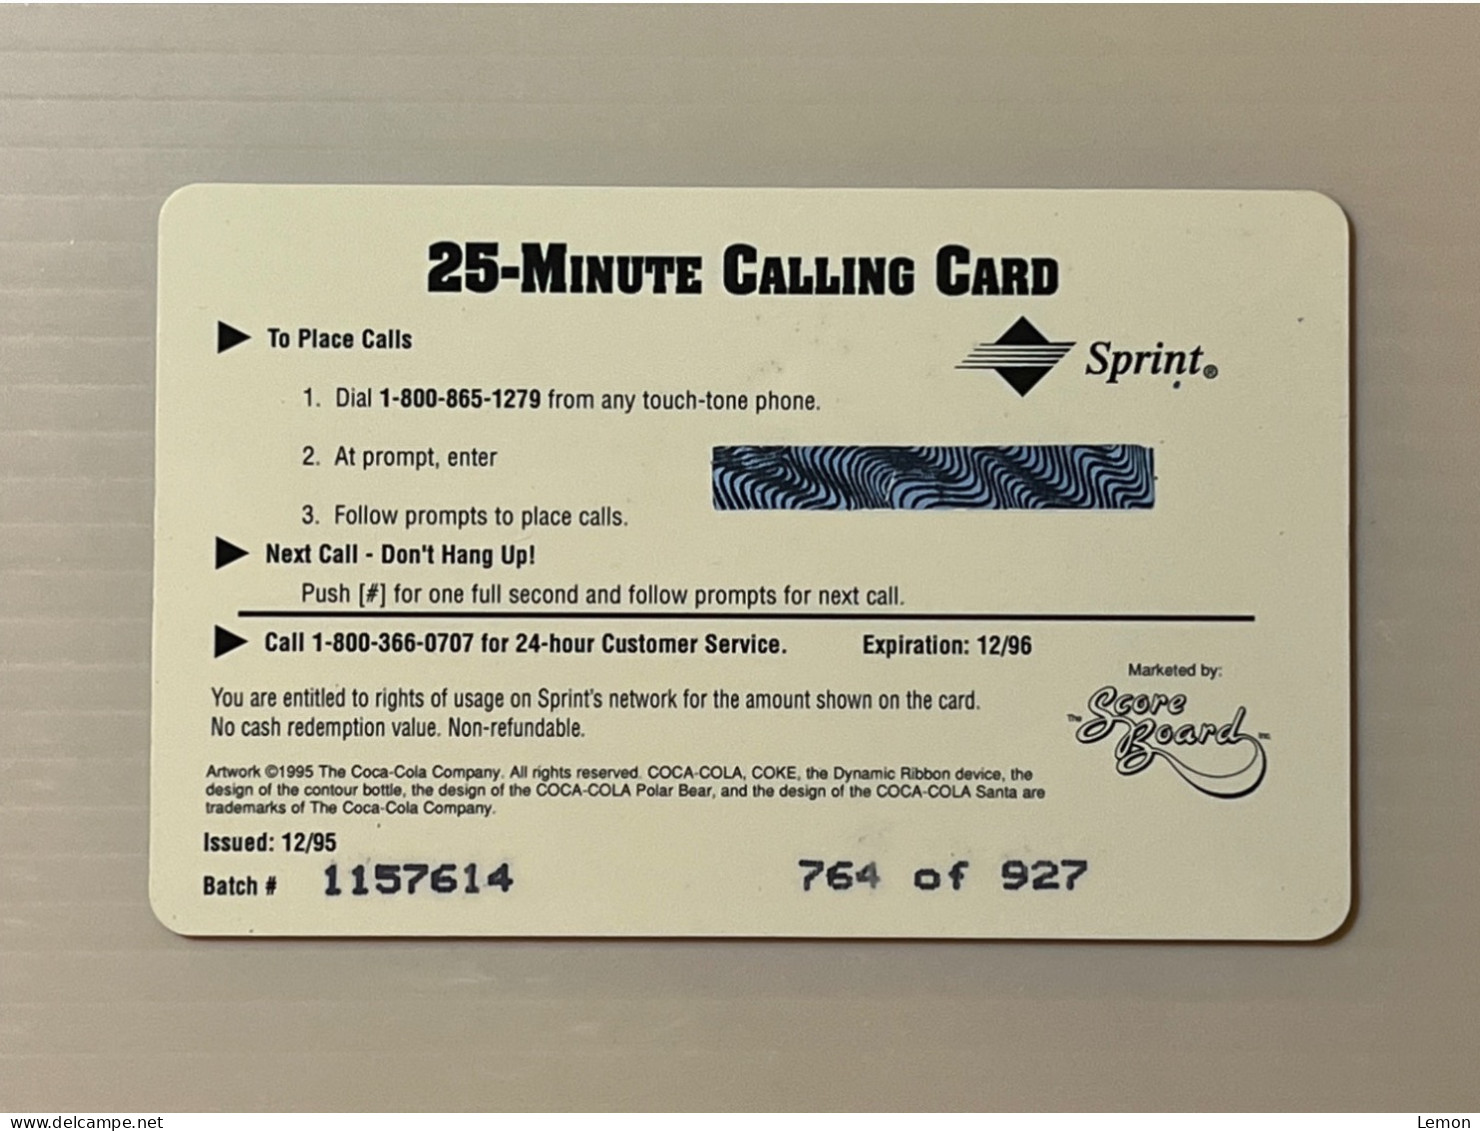 Mint USA UNITED STATES America Prepaid Telecard Phonecard, Coca Cola White Bear $25 Card Gold Border, Set Of 1 Mint Card - Colecciones